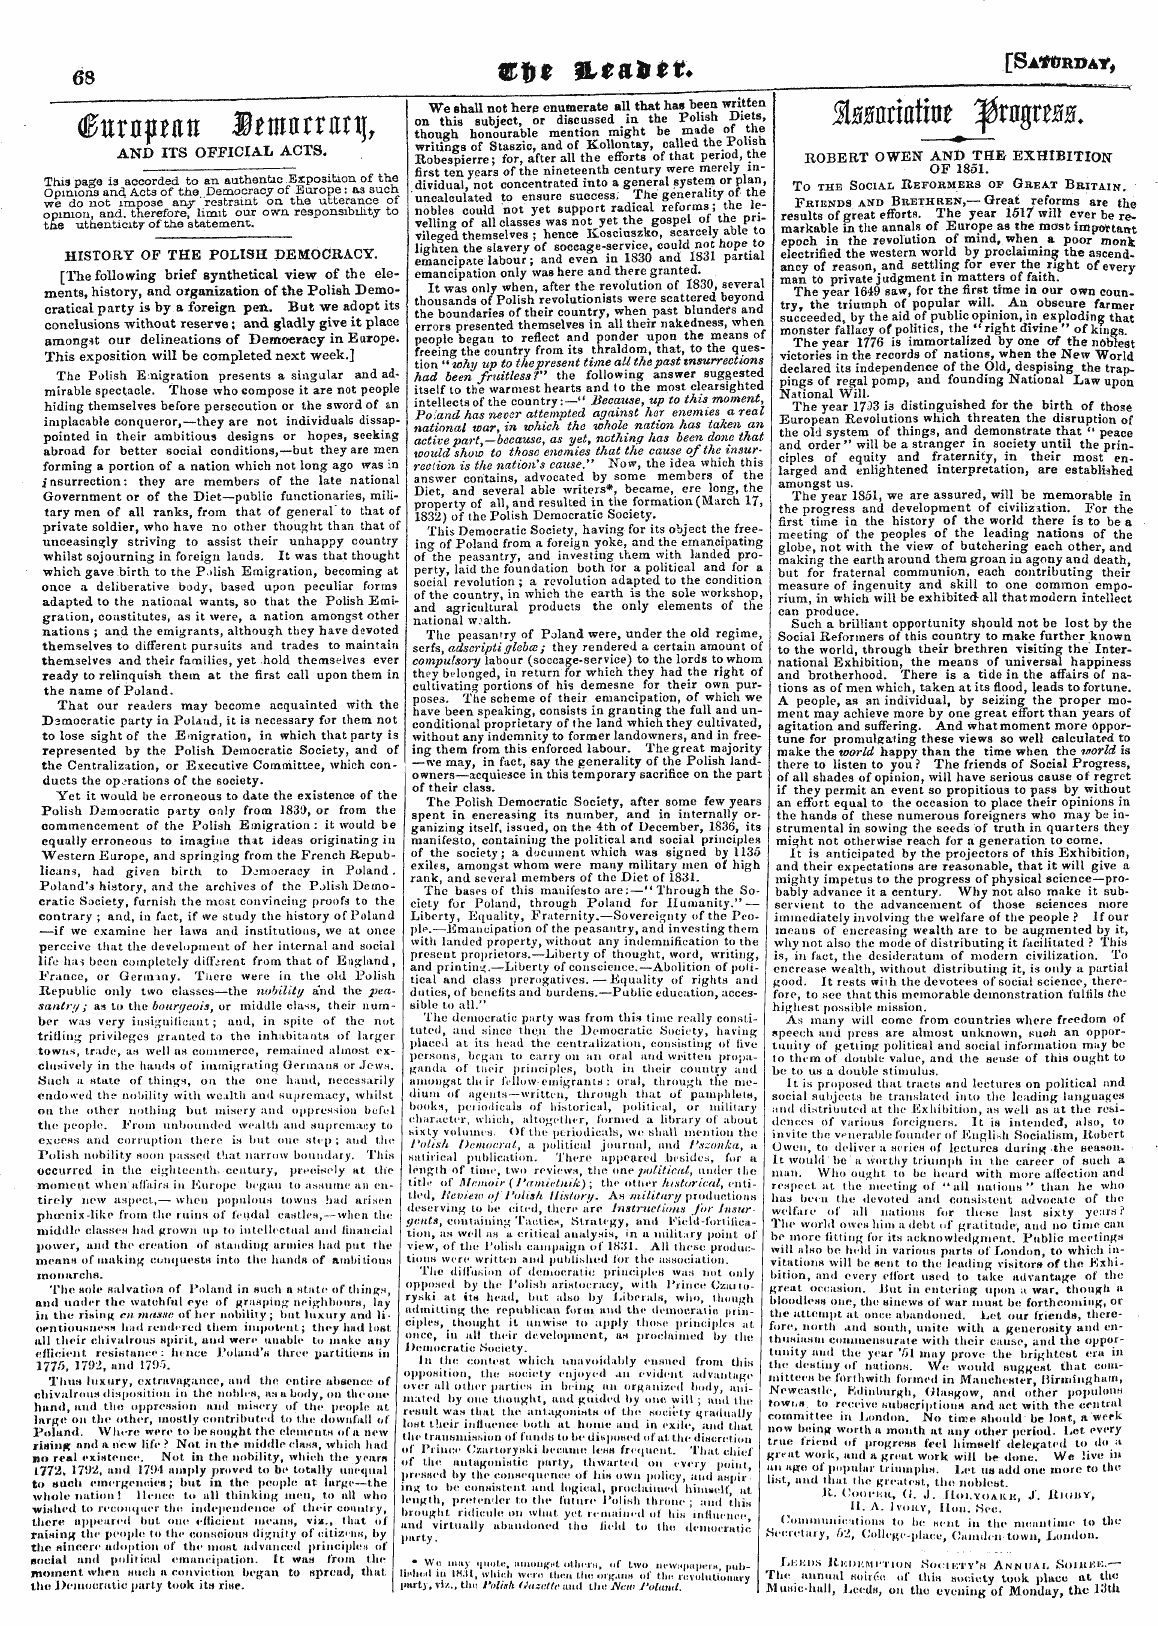 Leader (1850-1860): jS F Y, Country edition - Jtaarifitnit Bnycm